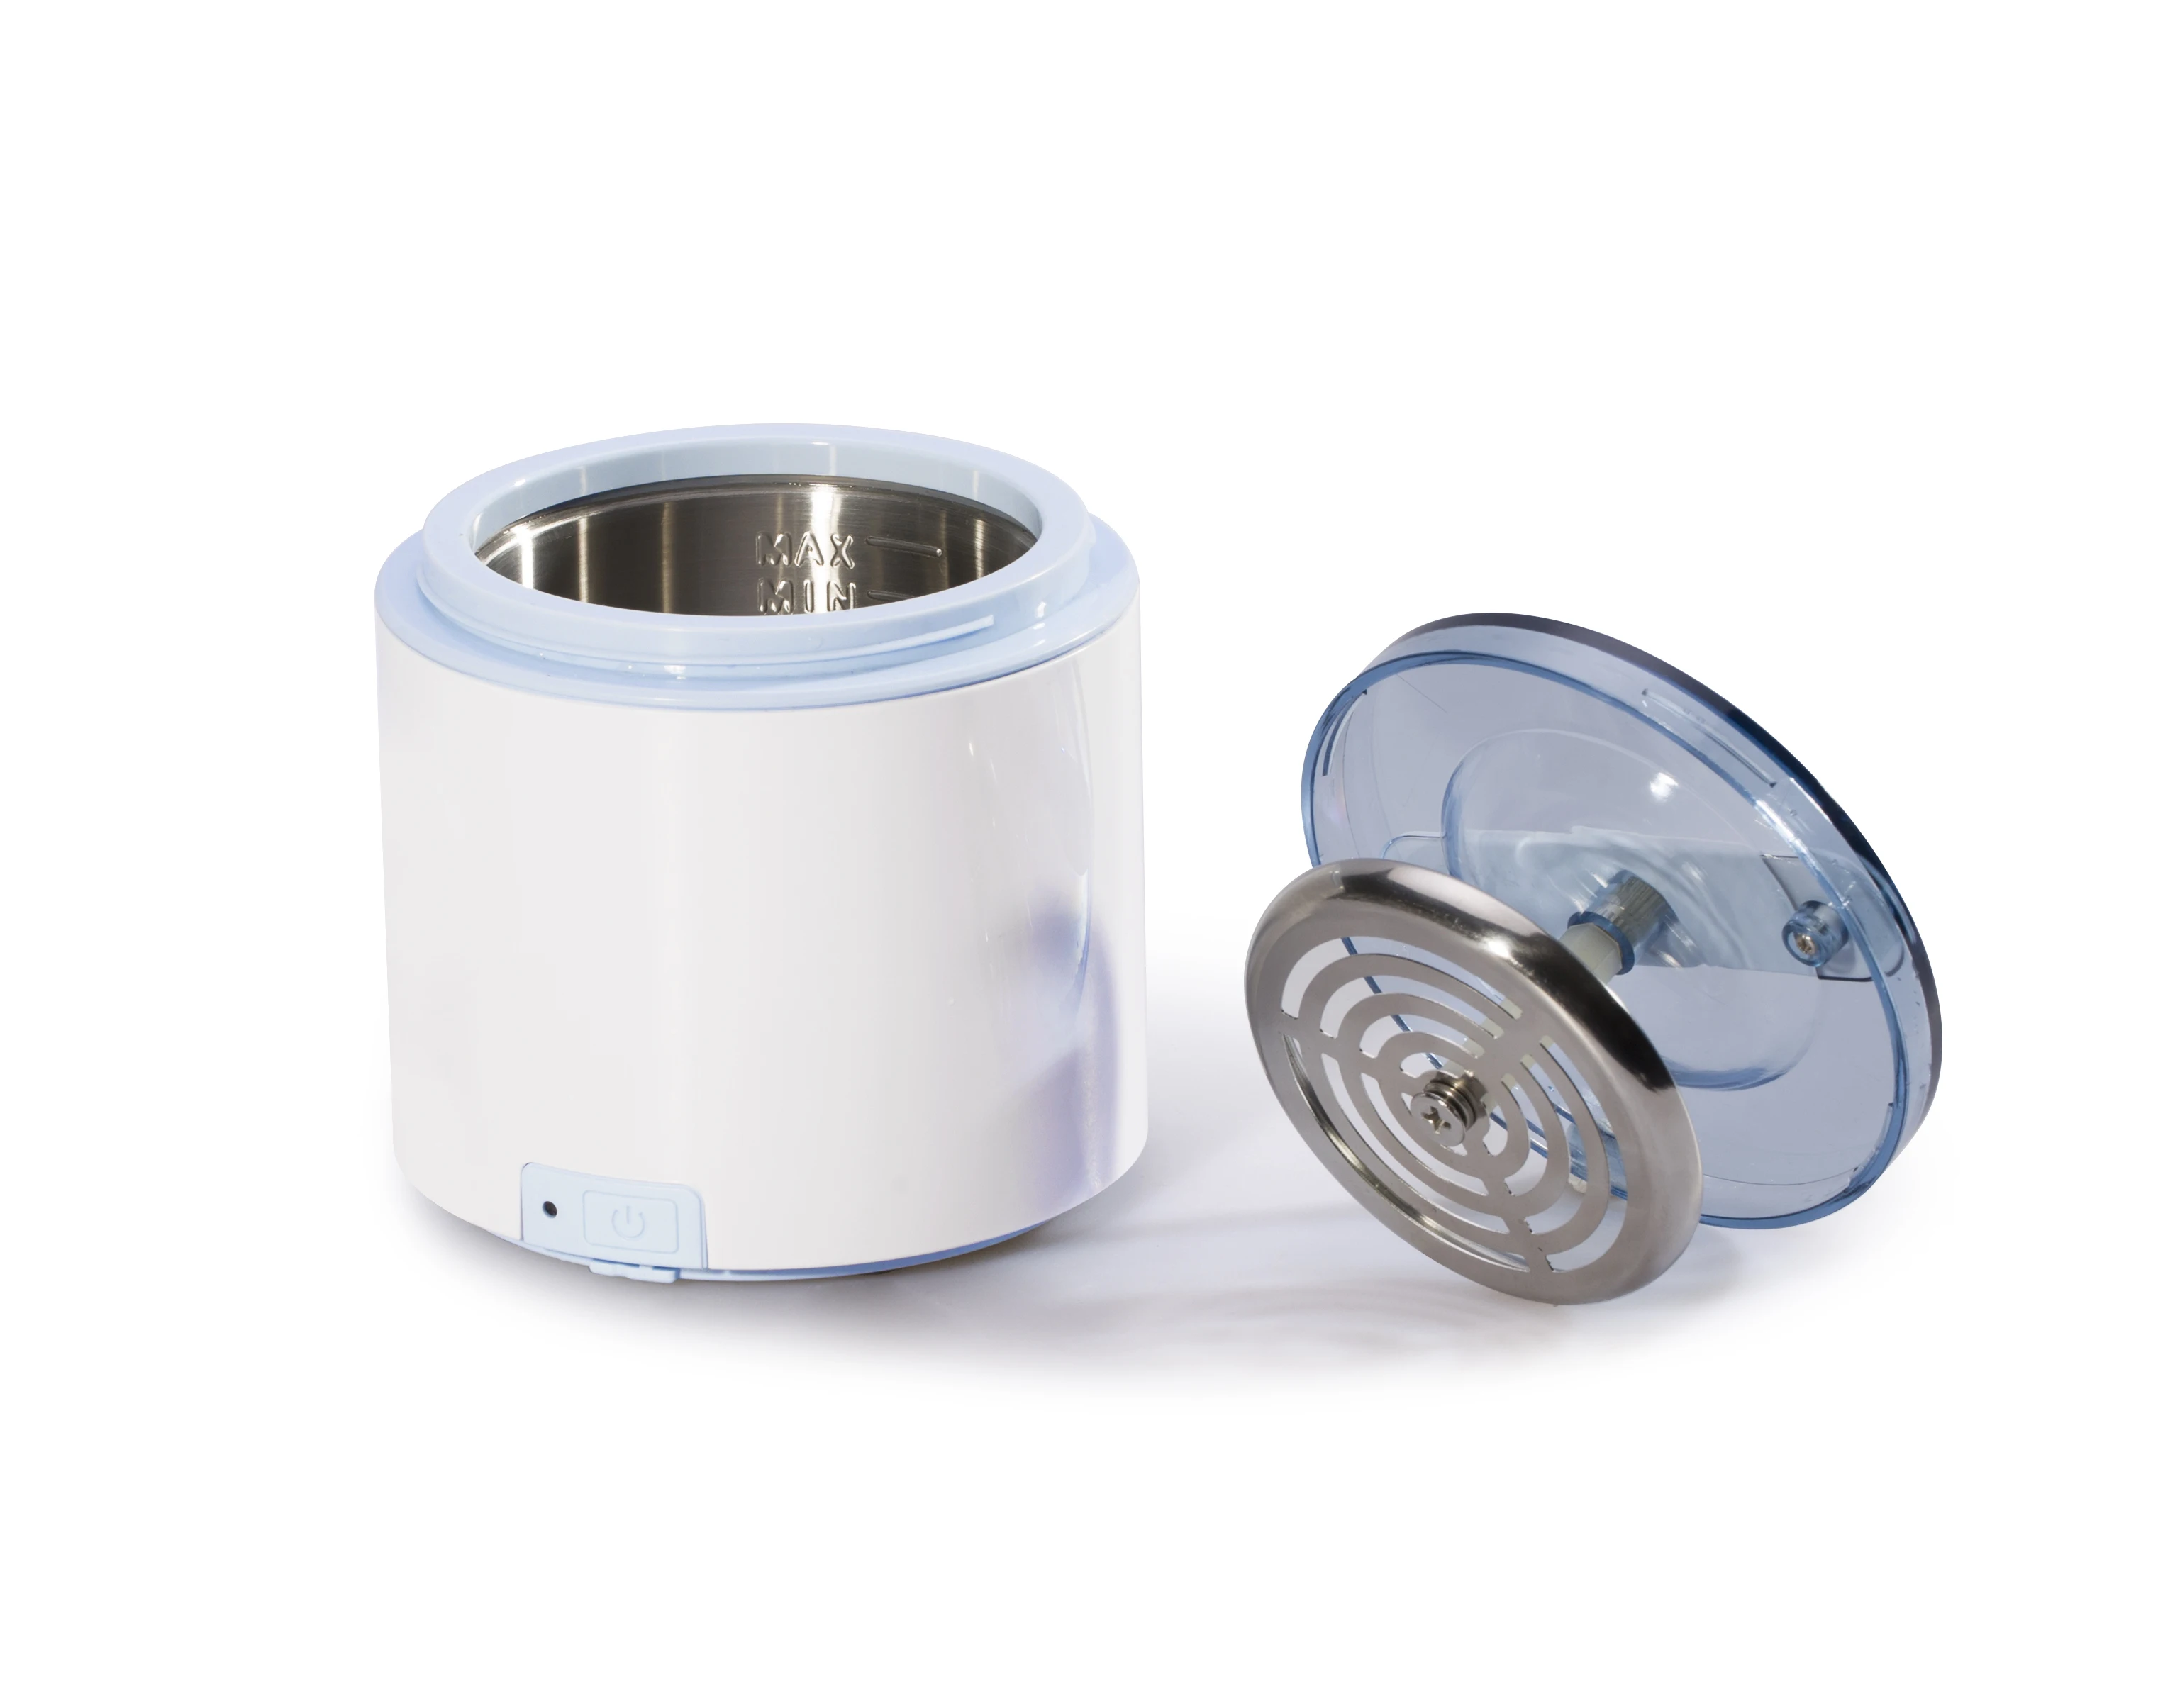 Mini size detachable auto-timer denture jewelry ultrasonic cleaner